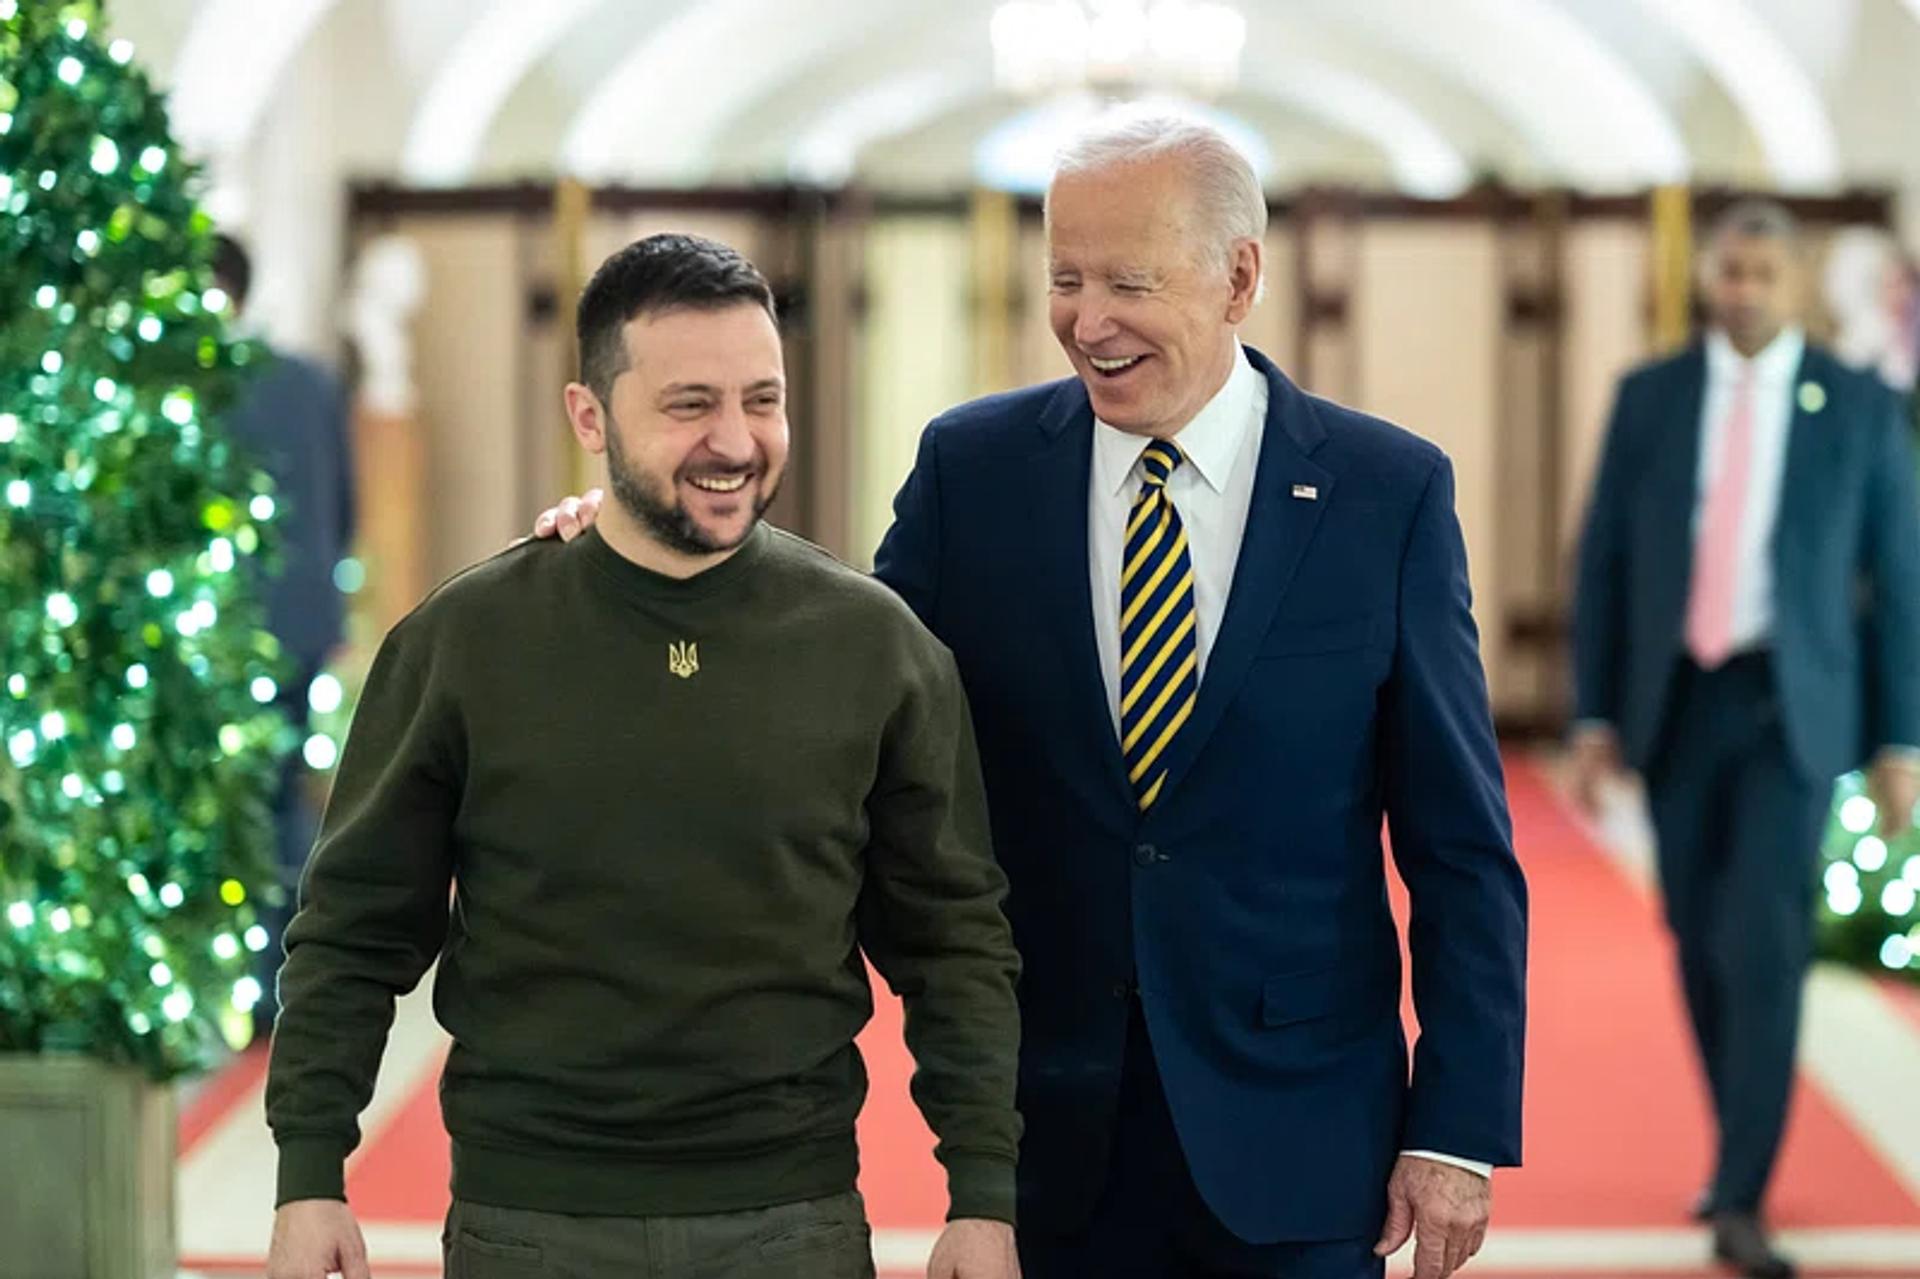 President Joe Biden pictured smiling while walking with Volodymyr Zelenskyy